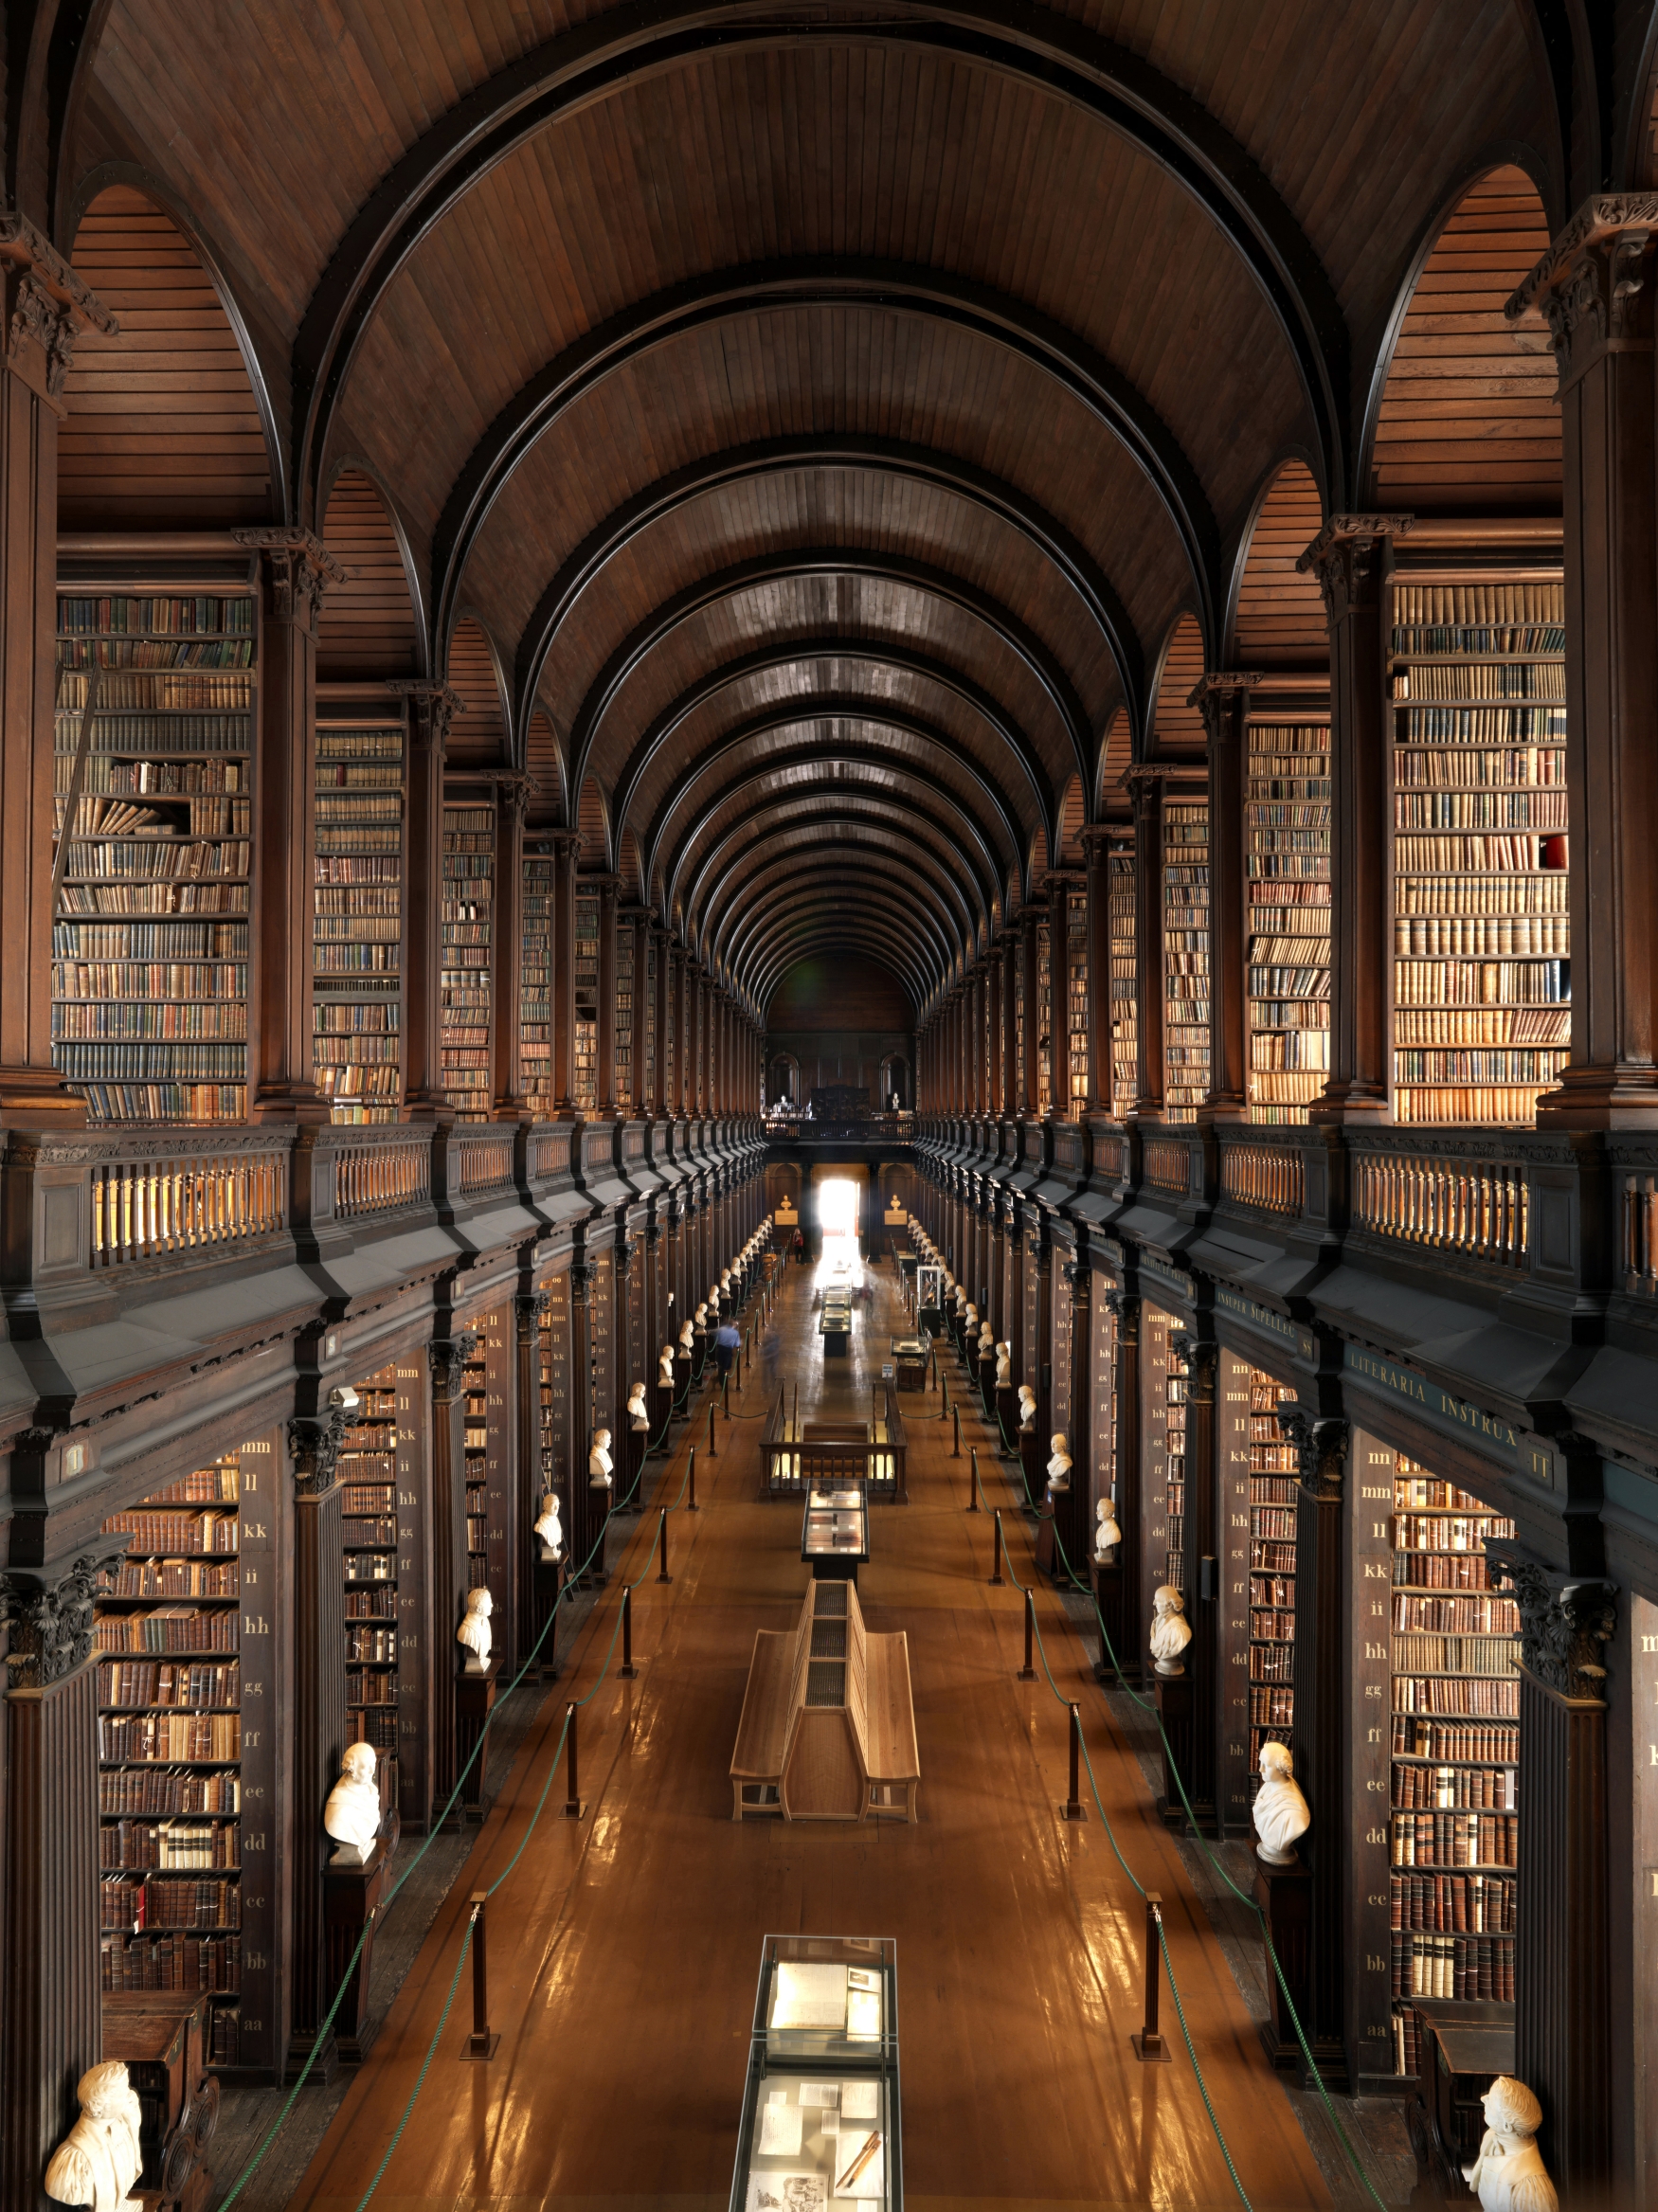 Attachment library. Тринити колледж Дублин. Библиотека Тринити-колледжа, Дублин, Ирландия. Библиотека Тринити-колледжа в Дублине. Тринити-колледж в Дублине, Ирландия.